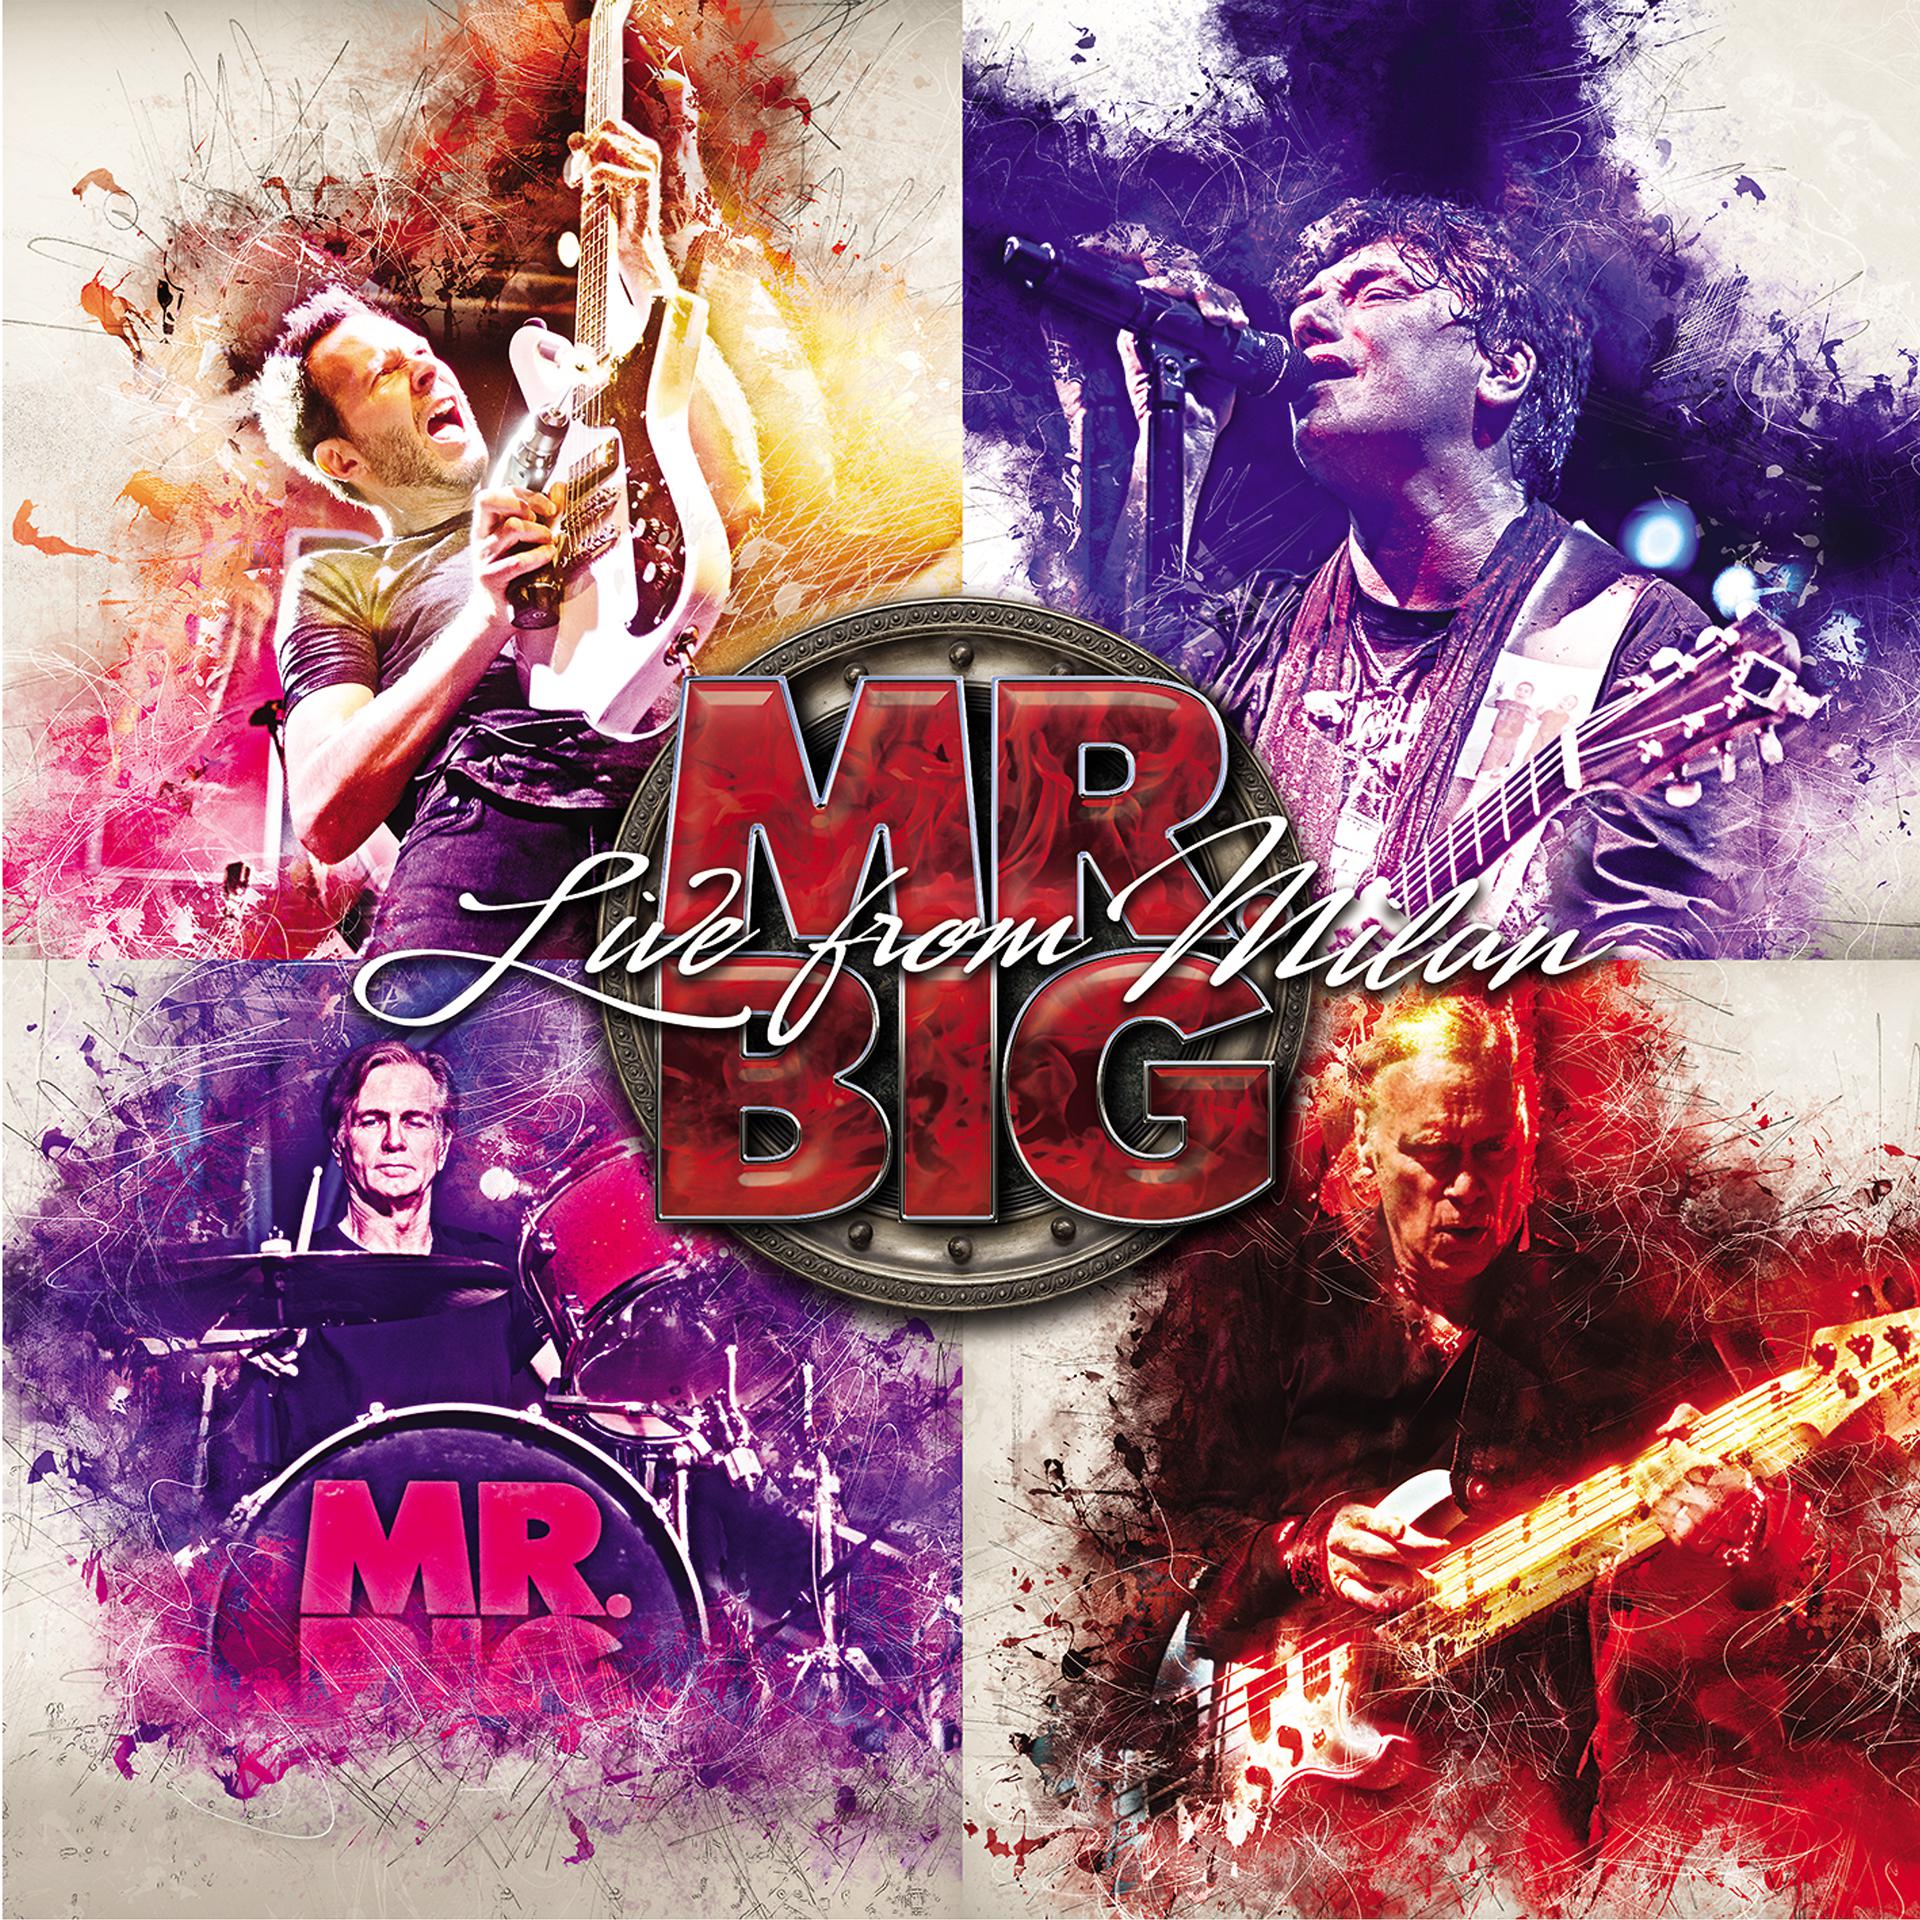 Being mr big. Mr big. Mr big album. Mr. big "Defying Gravity". Mr. big Live.